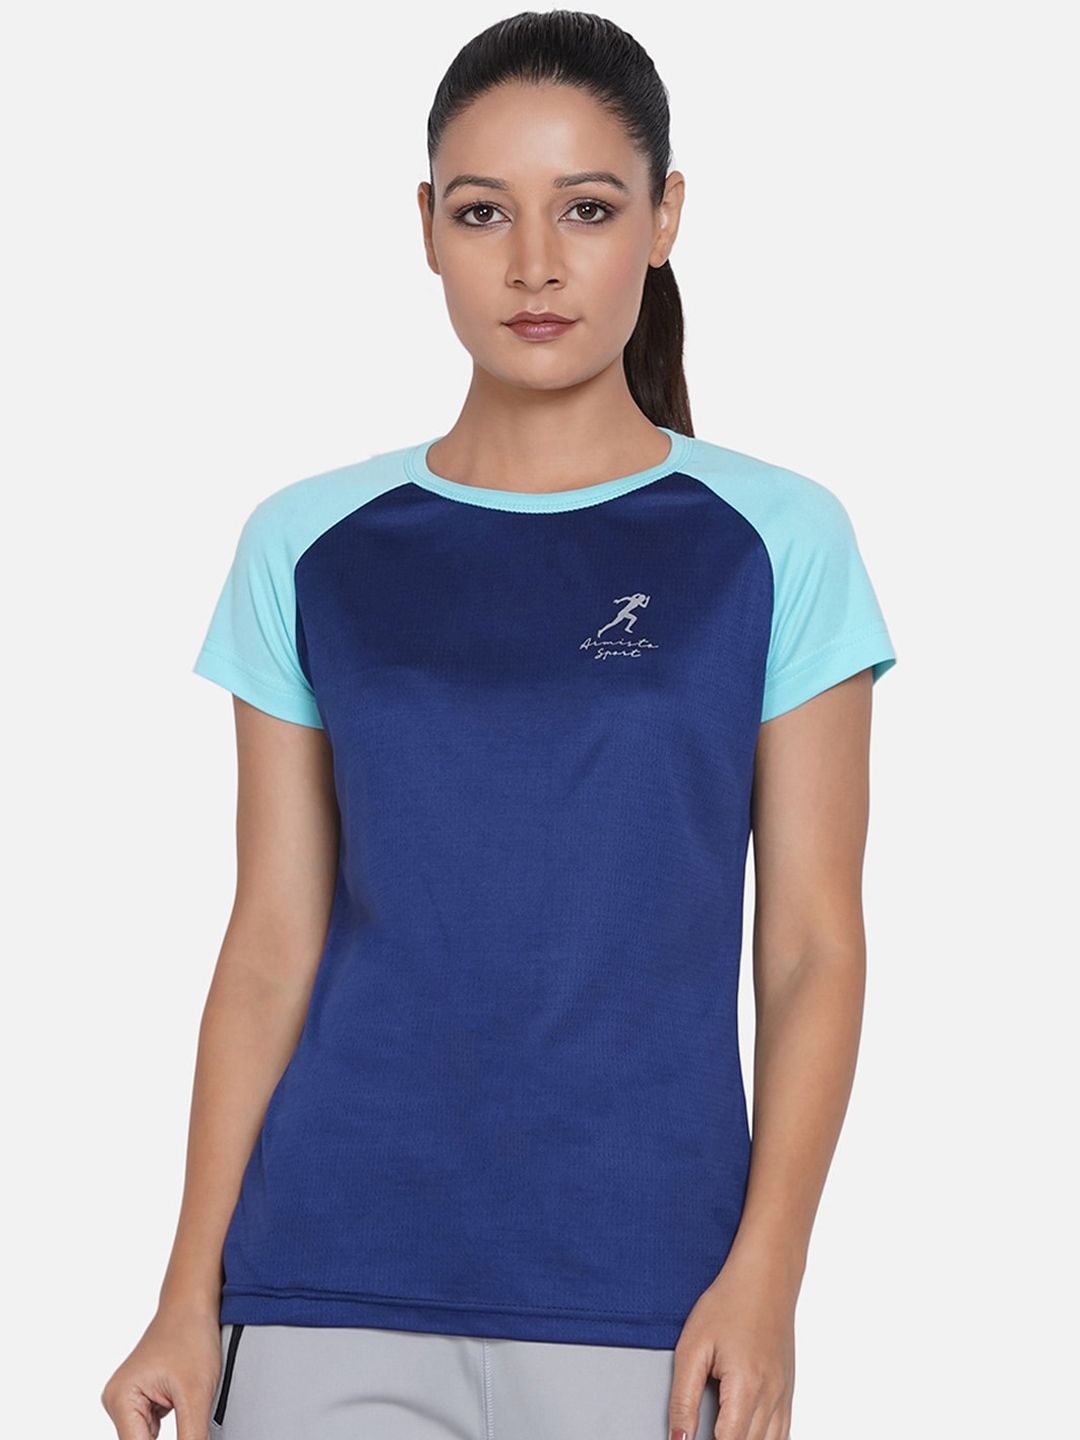 ARMISTO Women Blue & Turquoise Blue Colourblocked Dri-FIT Slim Fit Training or Gym T-shirt Price in India